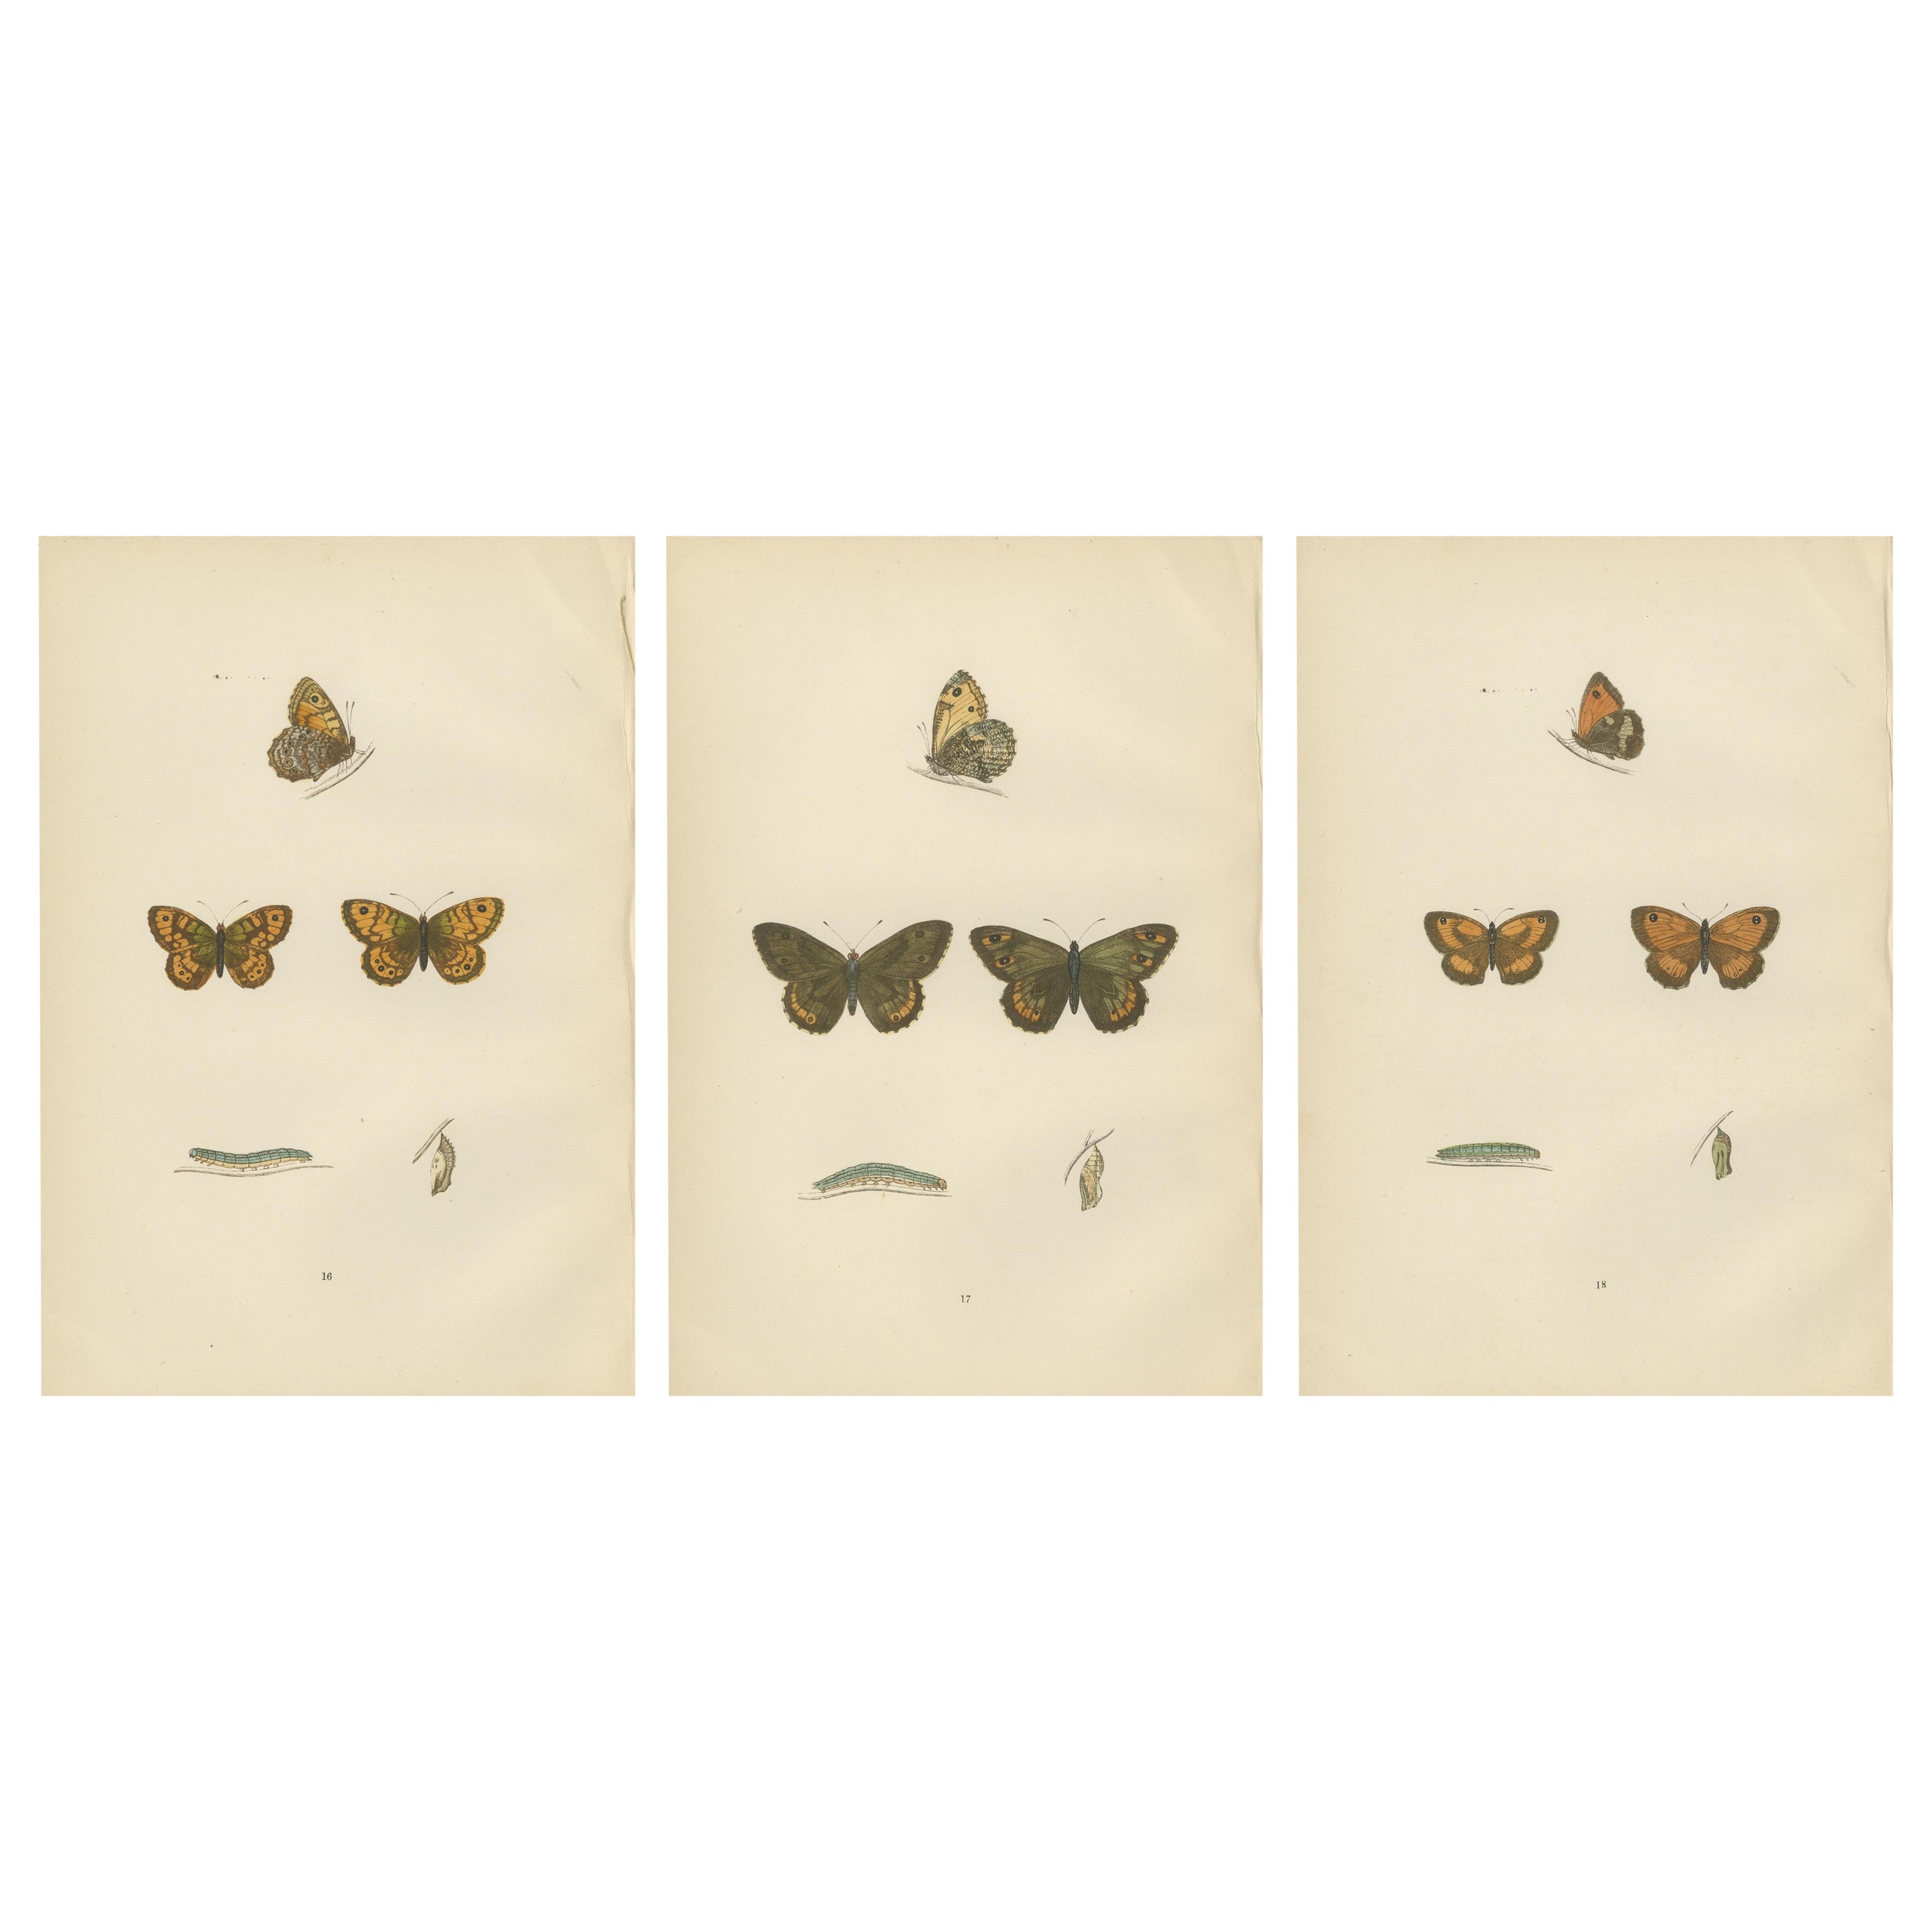 Metamorphosis Montage: The Lepidopteran Lifecycle, 1890